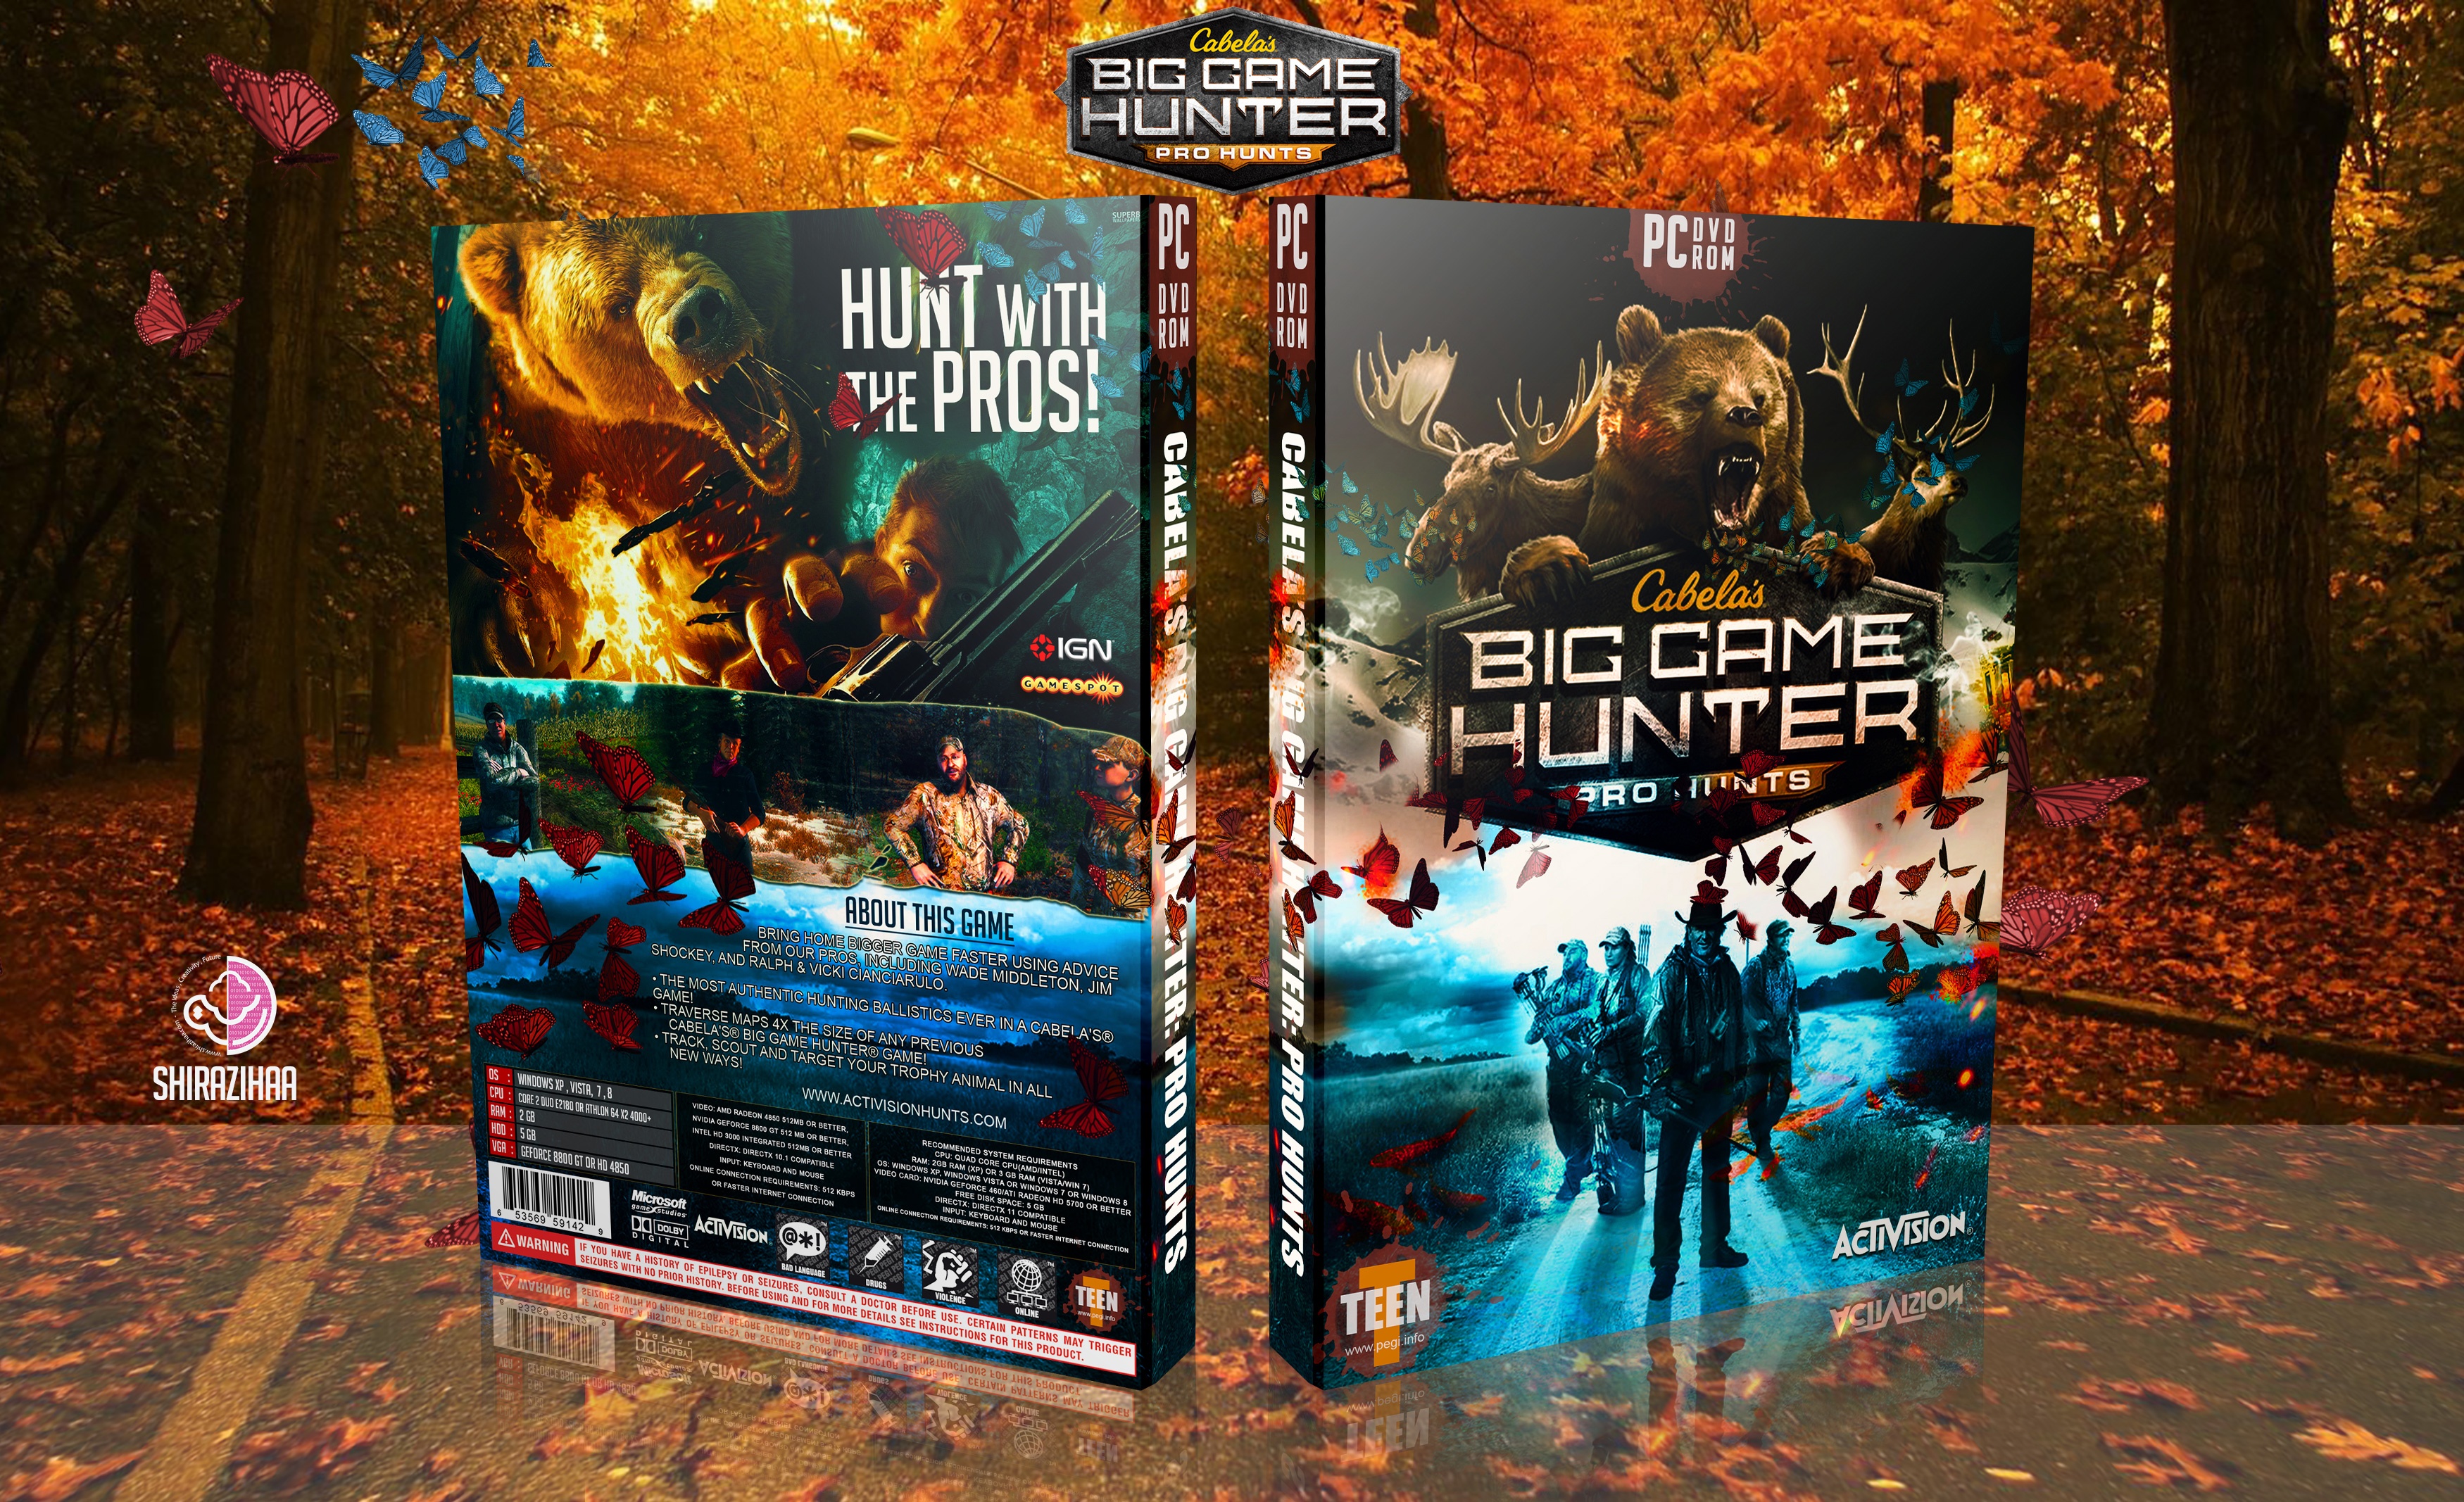 CABELA'S BIG GAME HUNTER PRO HUNTS box cover